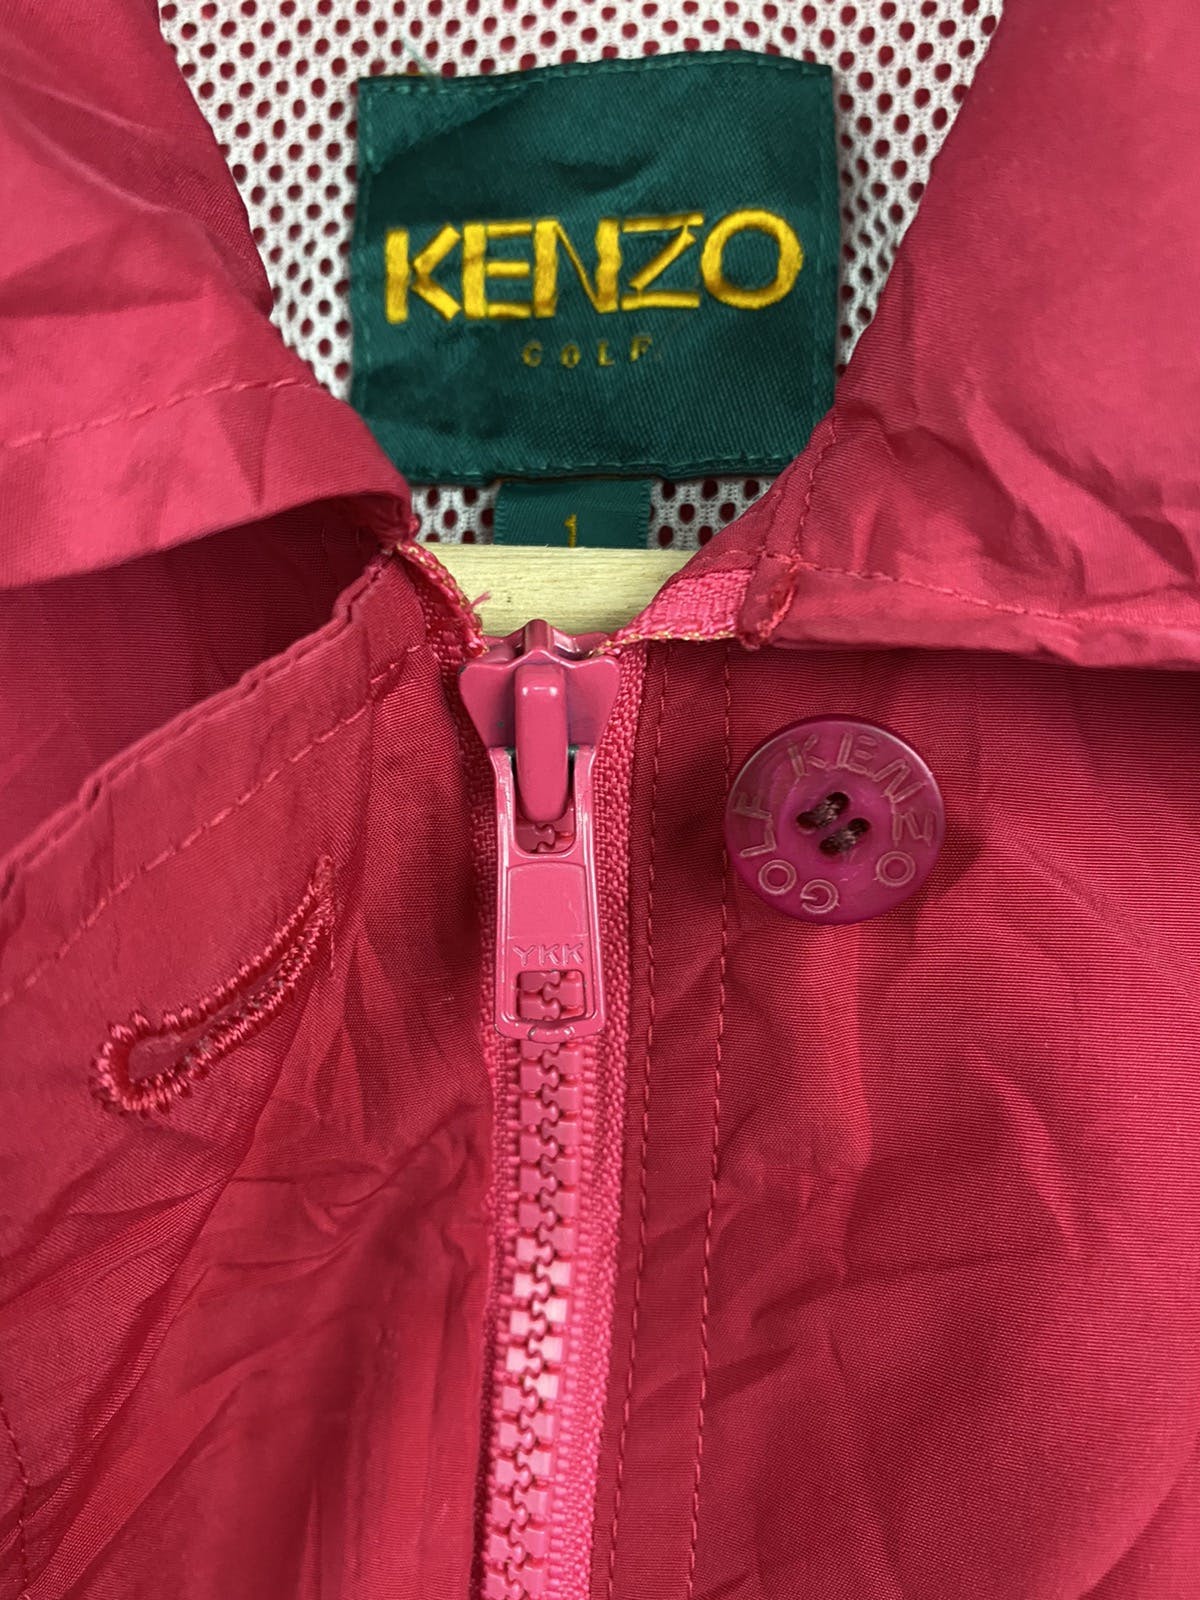 Kenzo Golf Light Jacket - 8